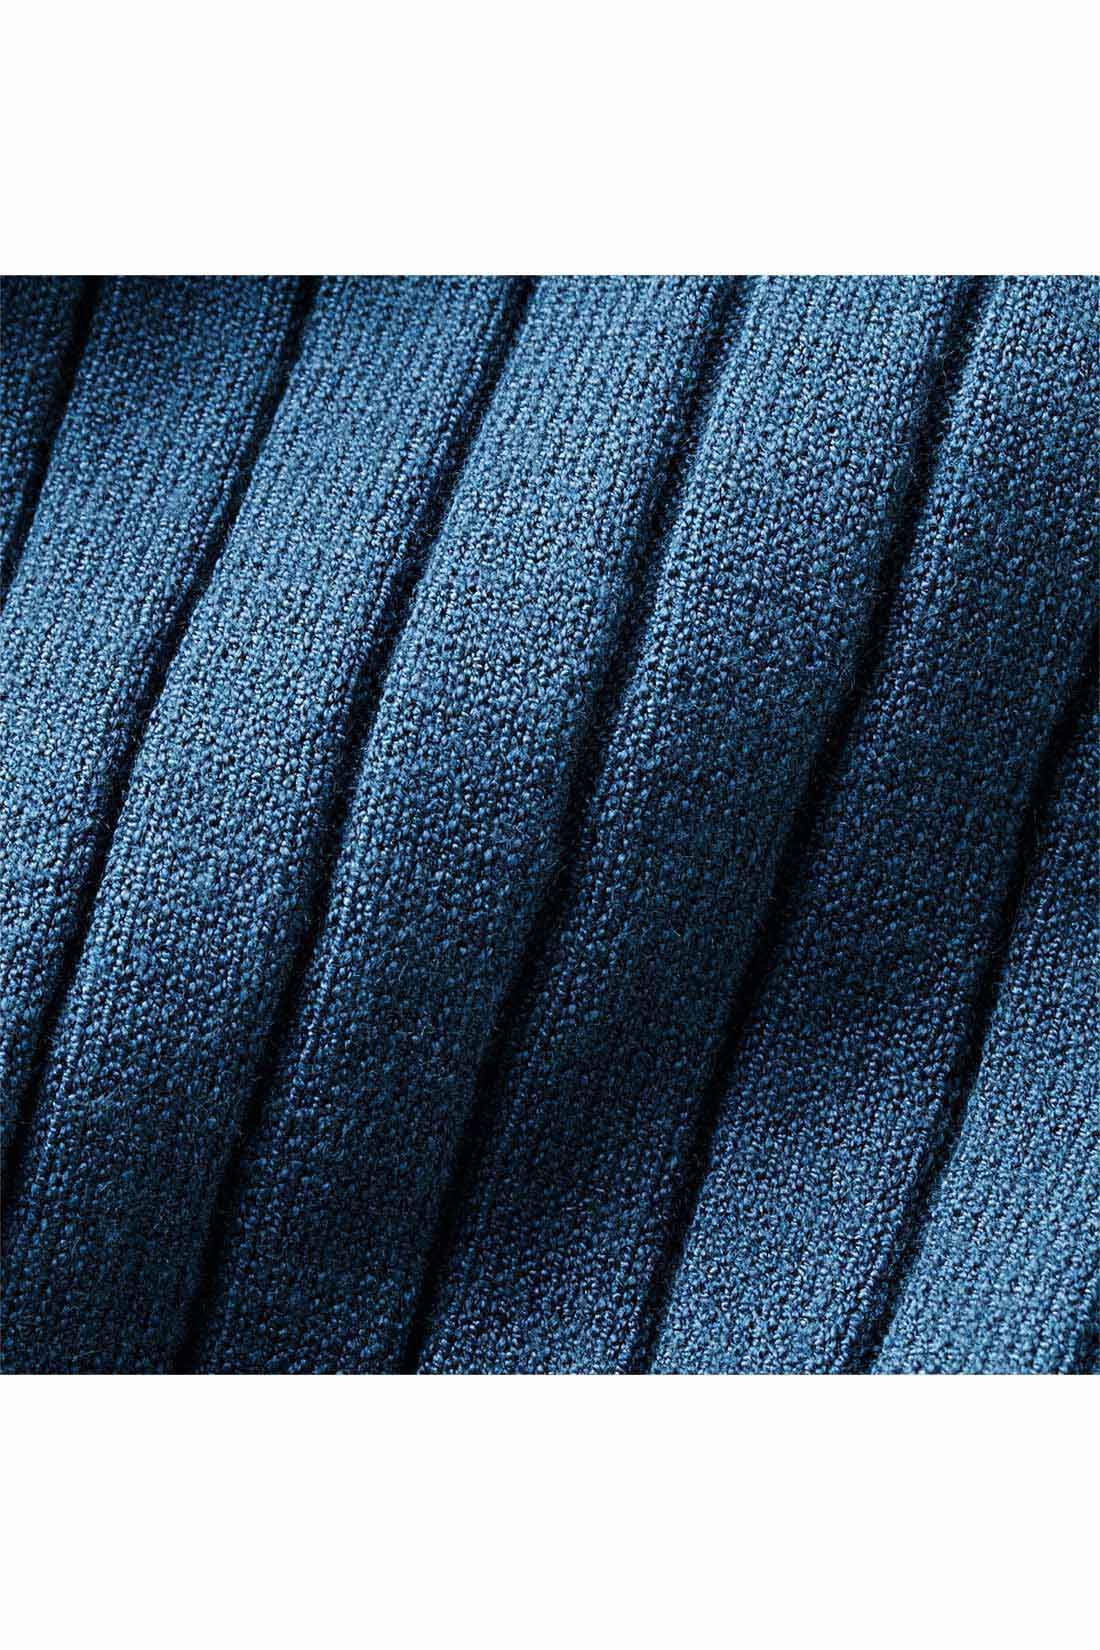 IEDIT|IEDIT[イディット]　キーネックデザインのワイドリブニットトップス〈ブルー〉|滑らかな肌ざわりのレーヨン混素材のワイドリブニット。